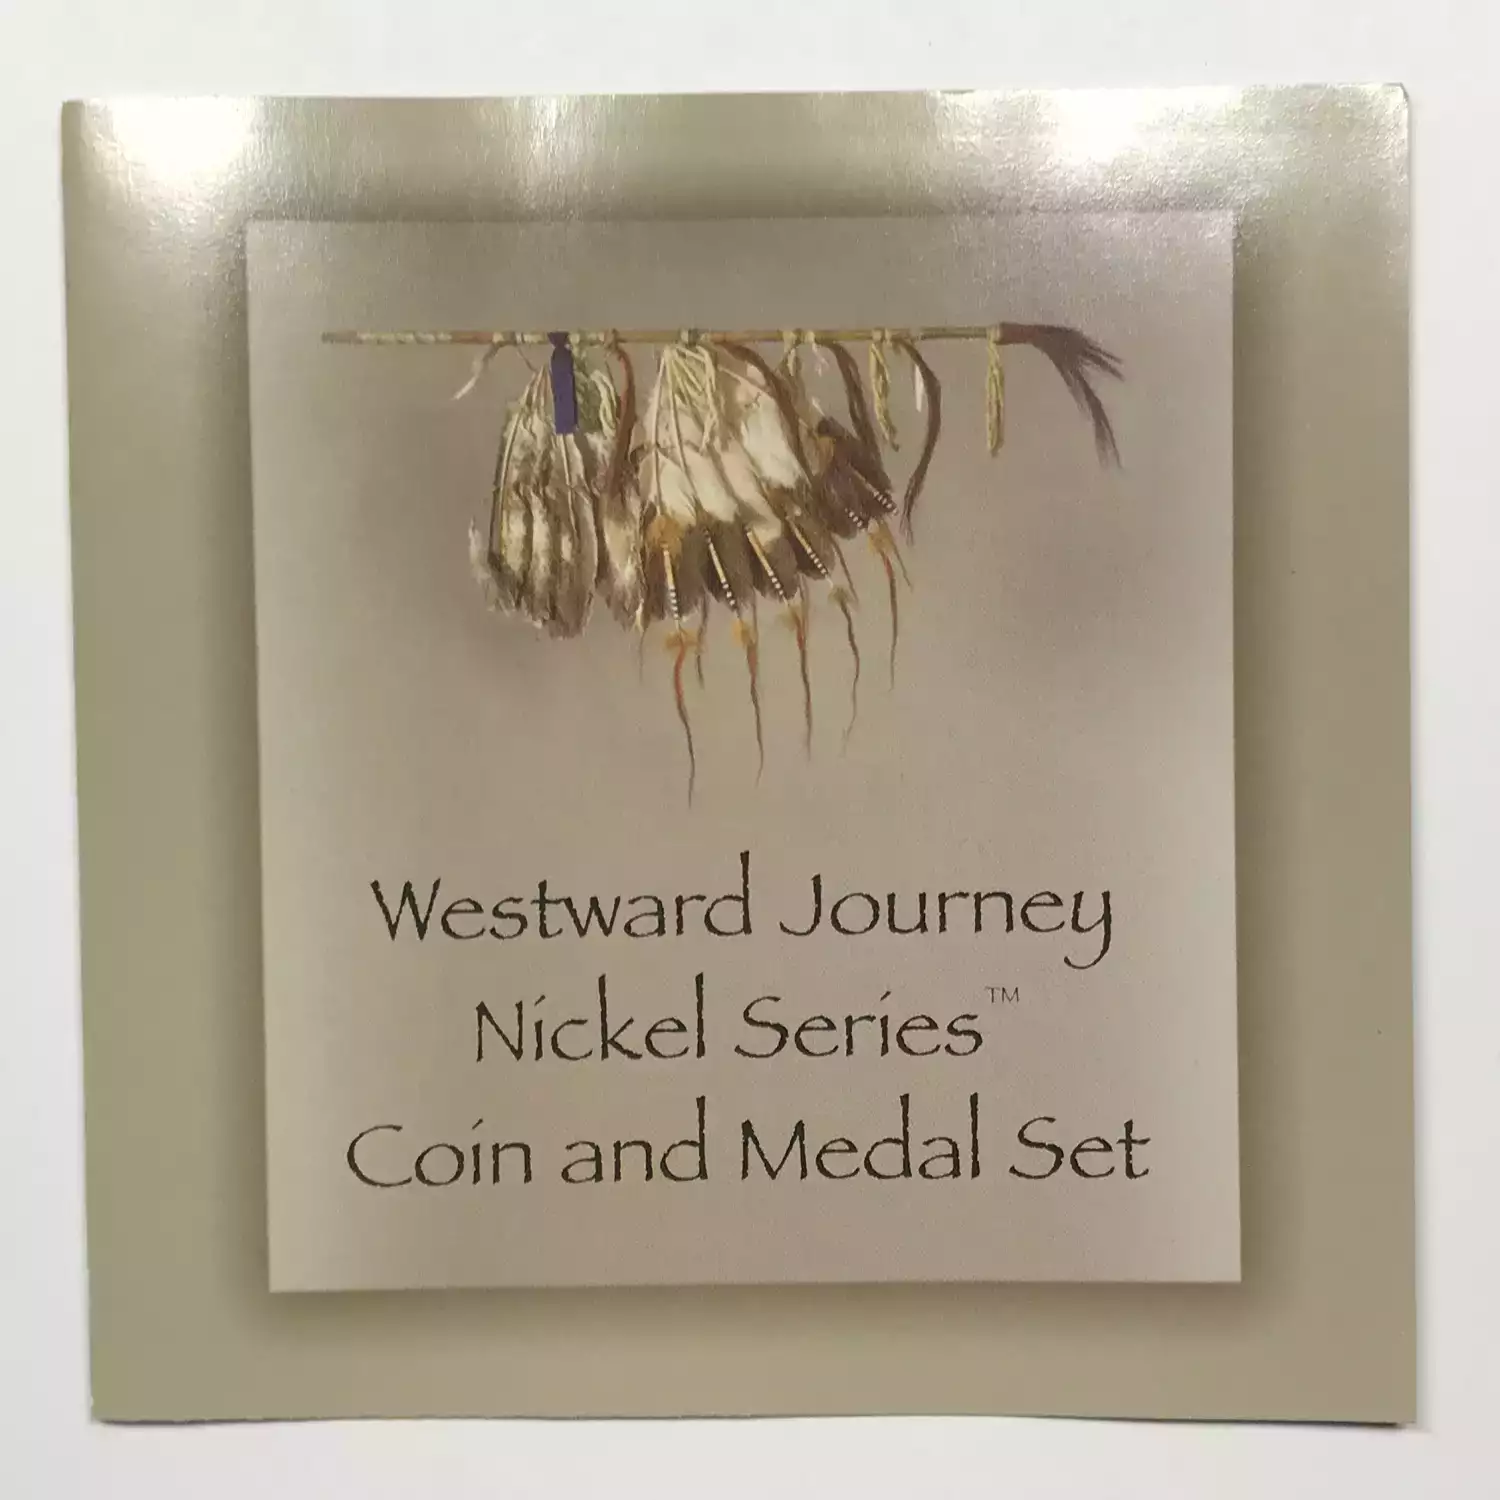 2005 Westward Journey Nickel Series Coin & Medal Set - Peace Friendship Medal (5)